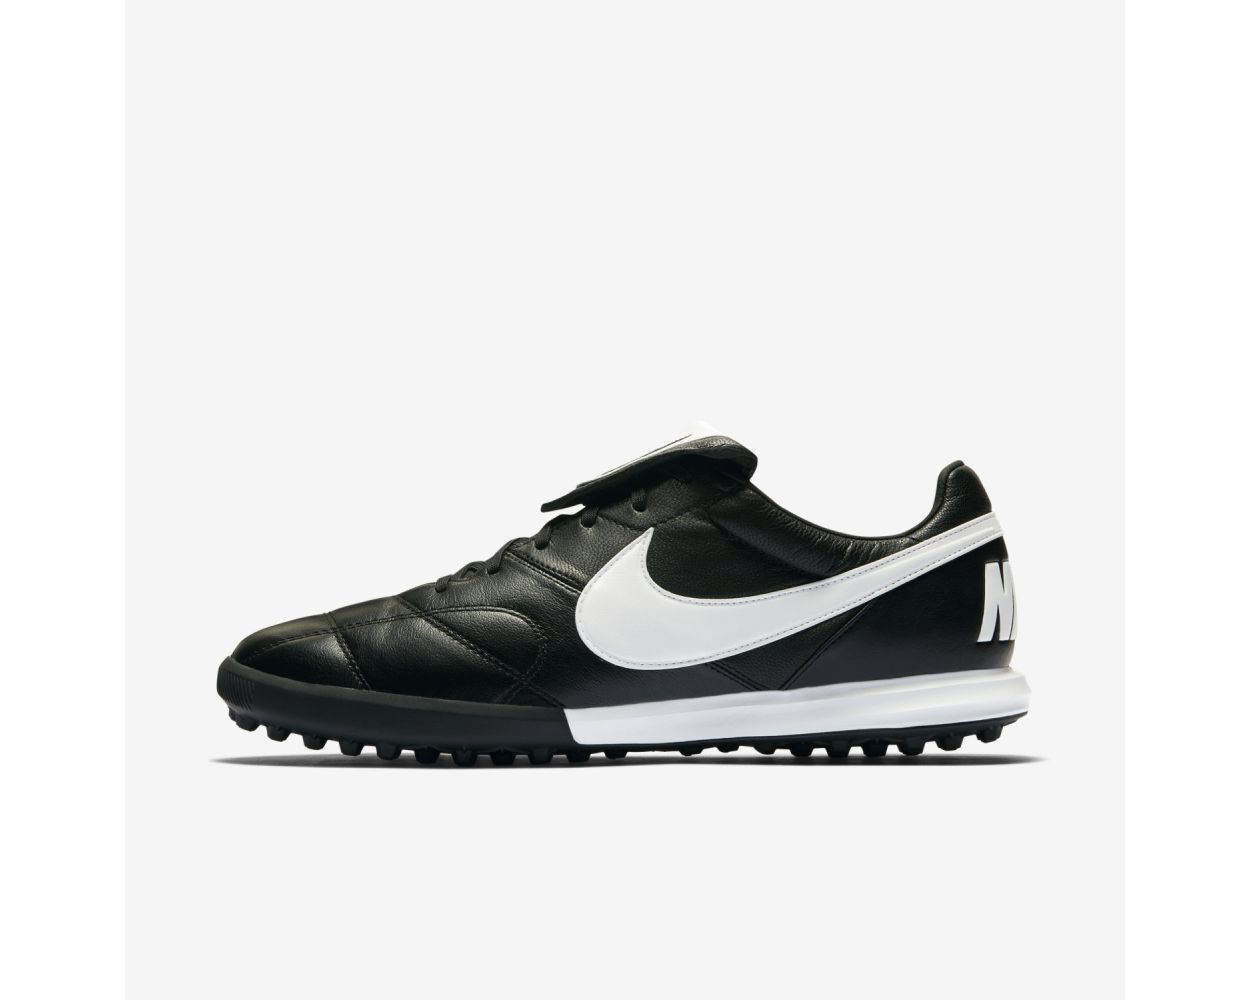 Nike Premier II Turf Soccer Shoes Mens - Black/White